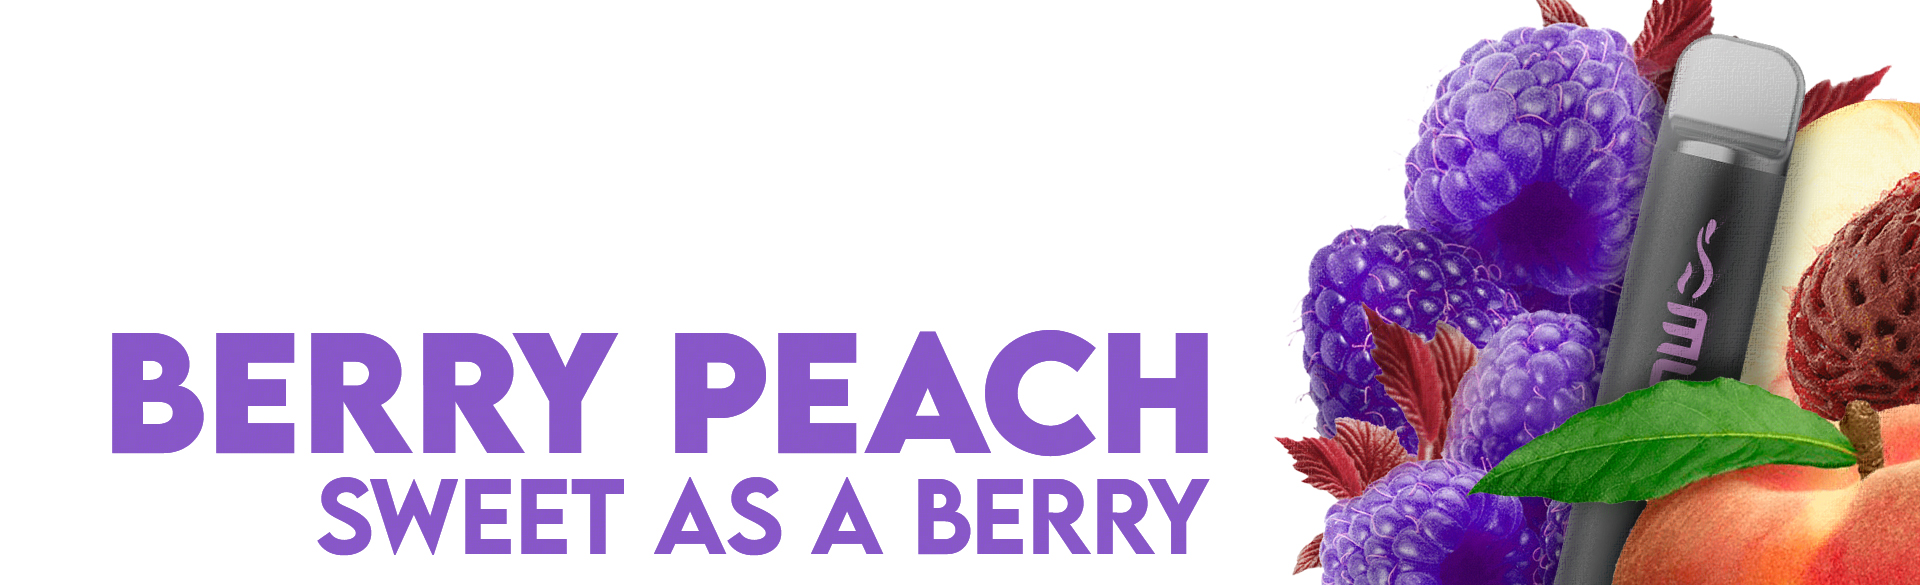 Berry Peach